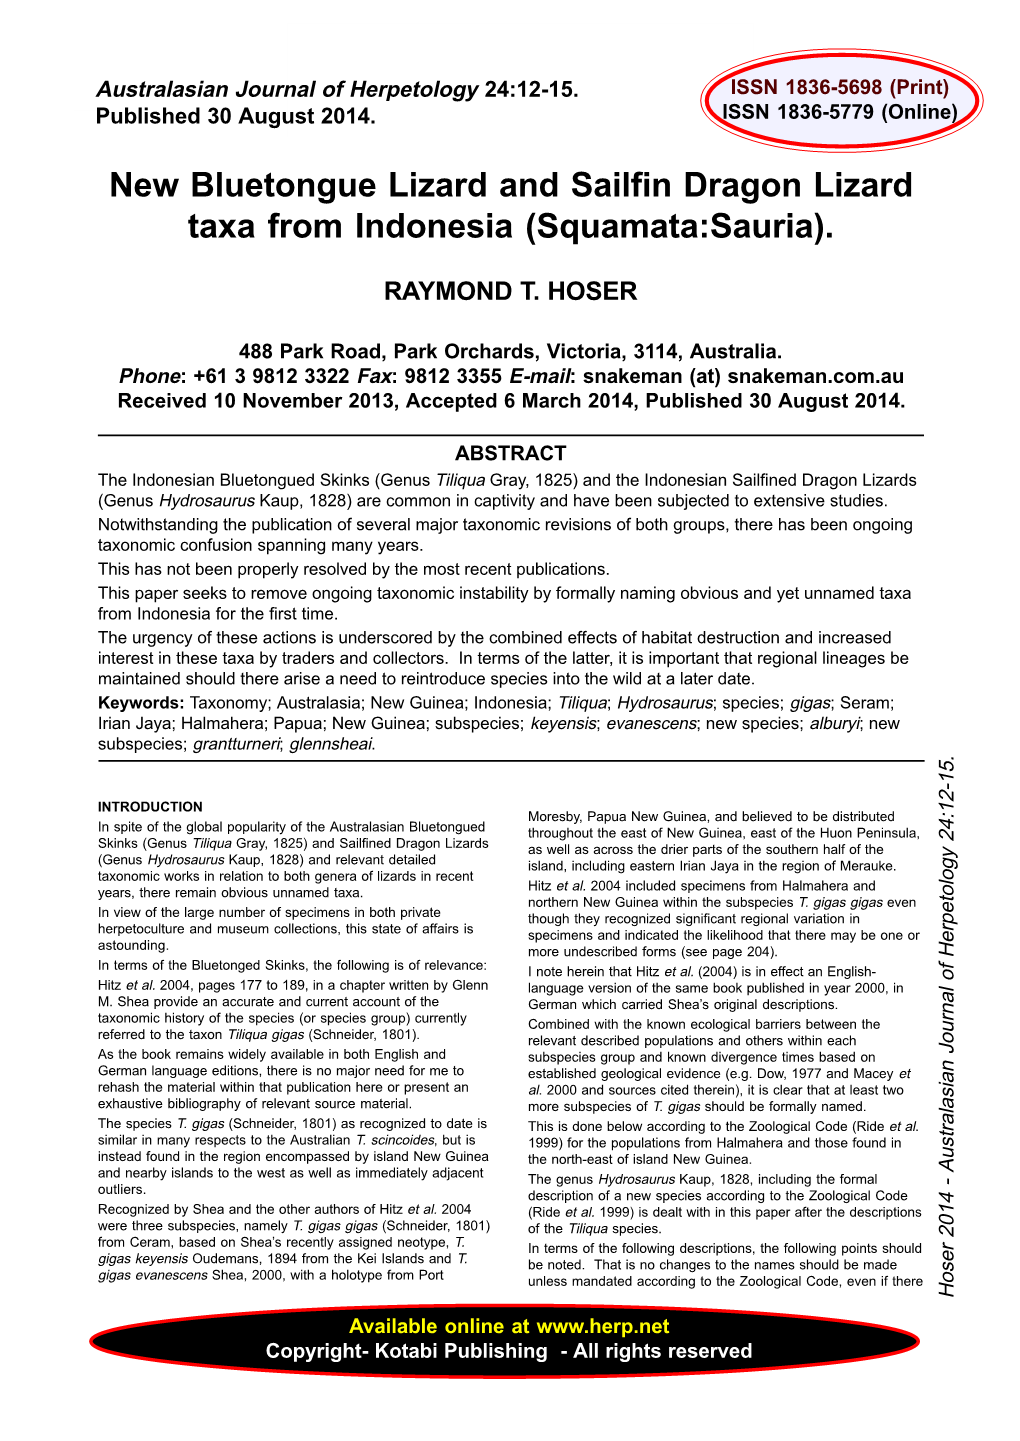 New Bluetongue Lizard and Sailfin Dragon Lizard Taxa from Indonesia (Squamata:Sauria)